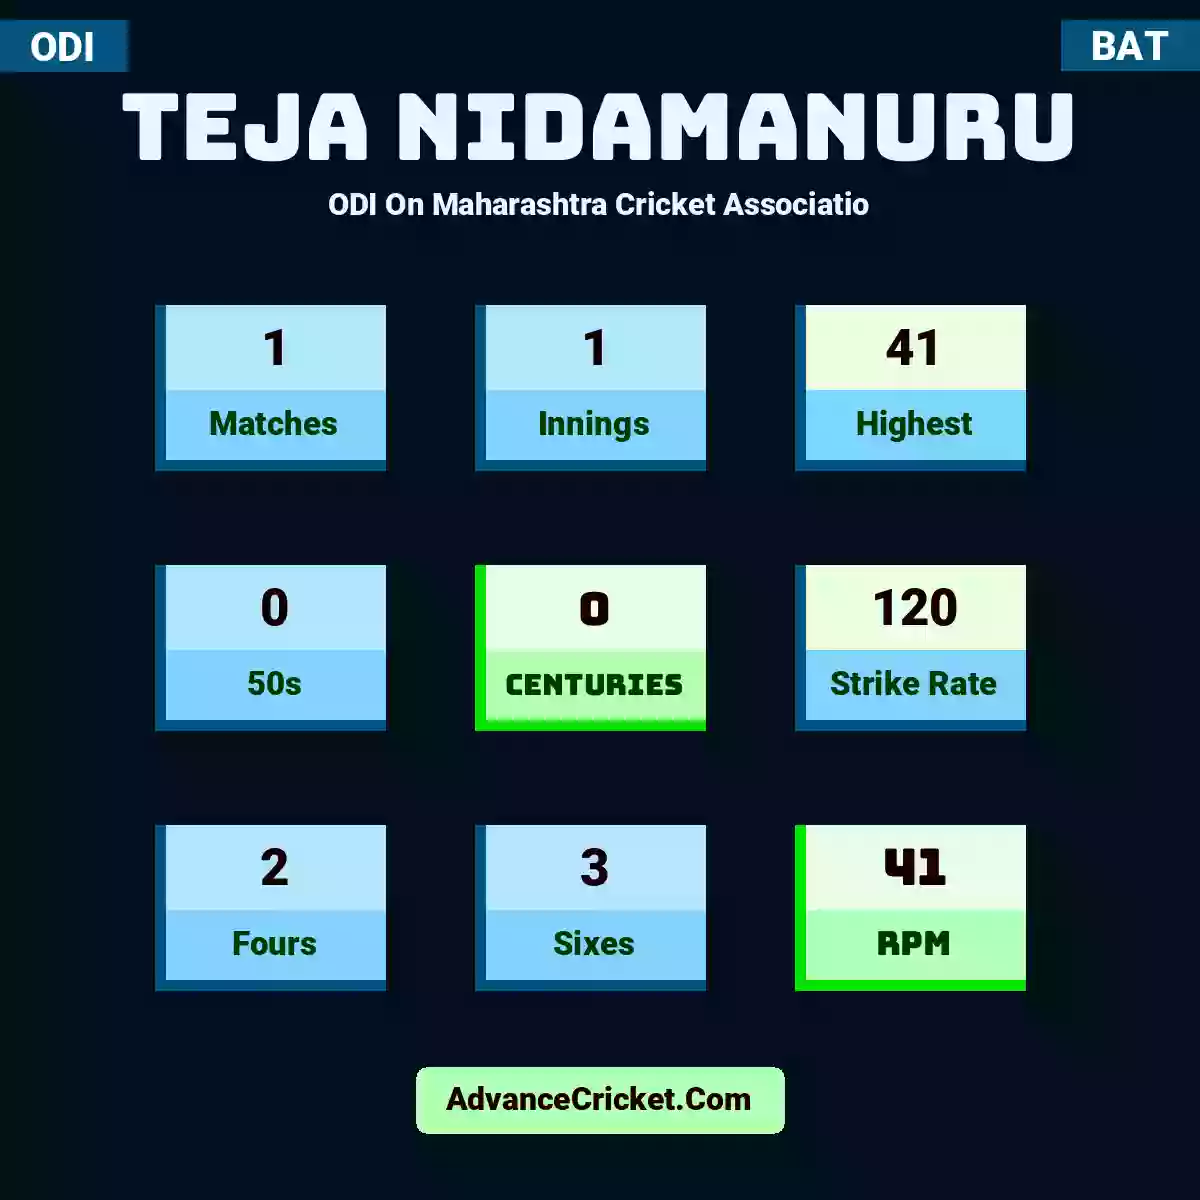 Teja Nidamanuru ODI  On Maharashtra Cricket Associatio, Teja Nidamanuru played 1 matches, scored 41 runs as highest, 0 half-centuries, and 0 centuries, with a strike rate of 120. T.Nidamanuru hit 2 fours and 3 sixes, with an RPM of 41.